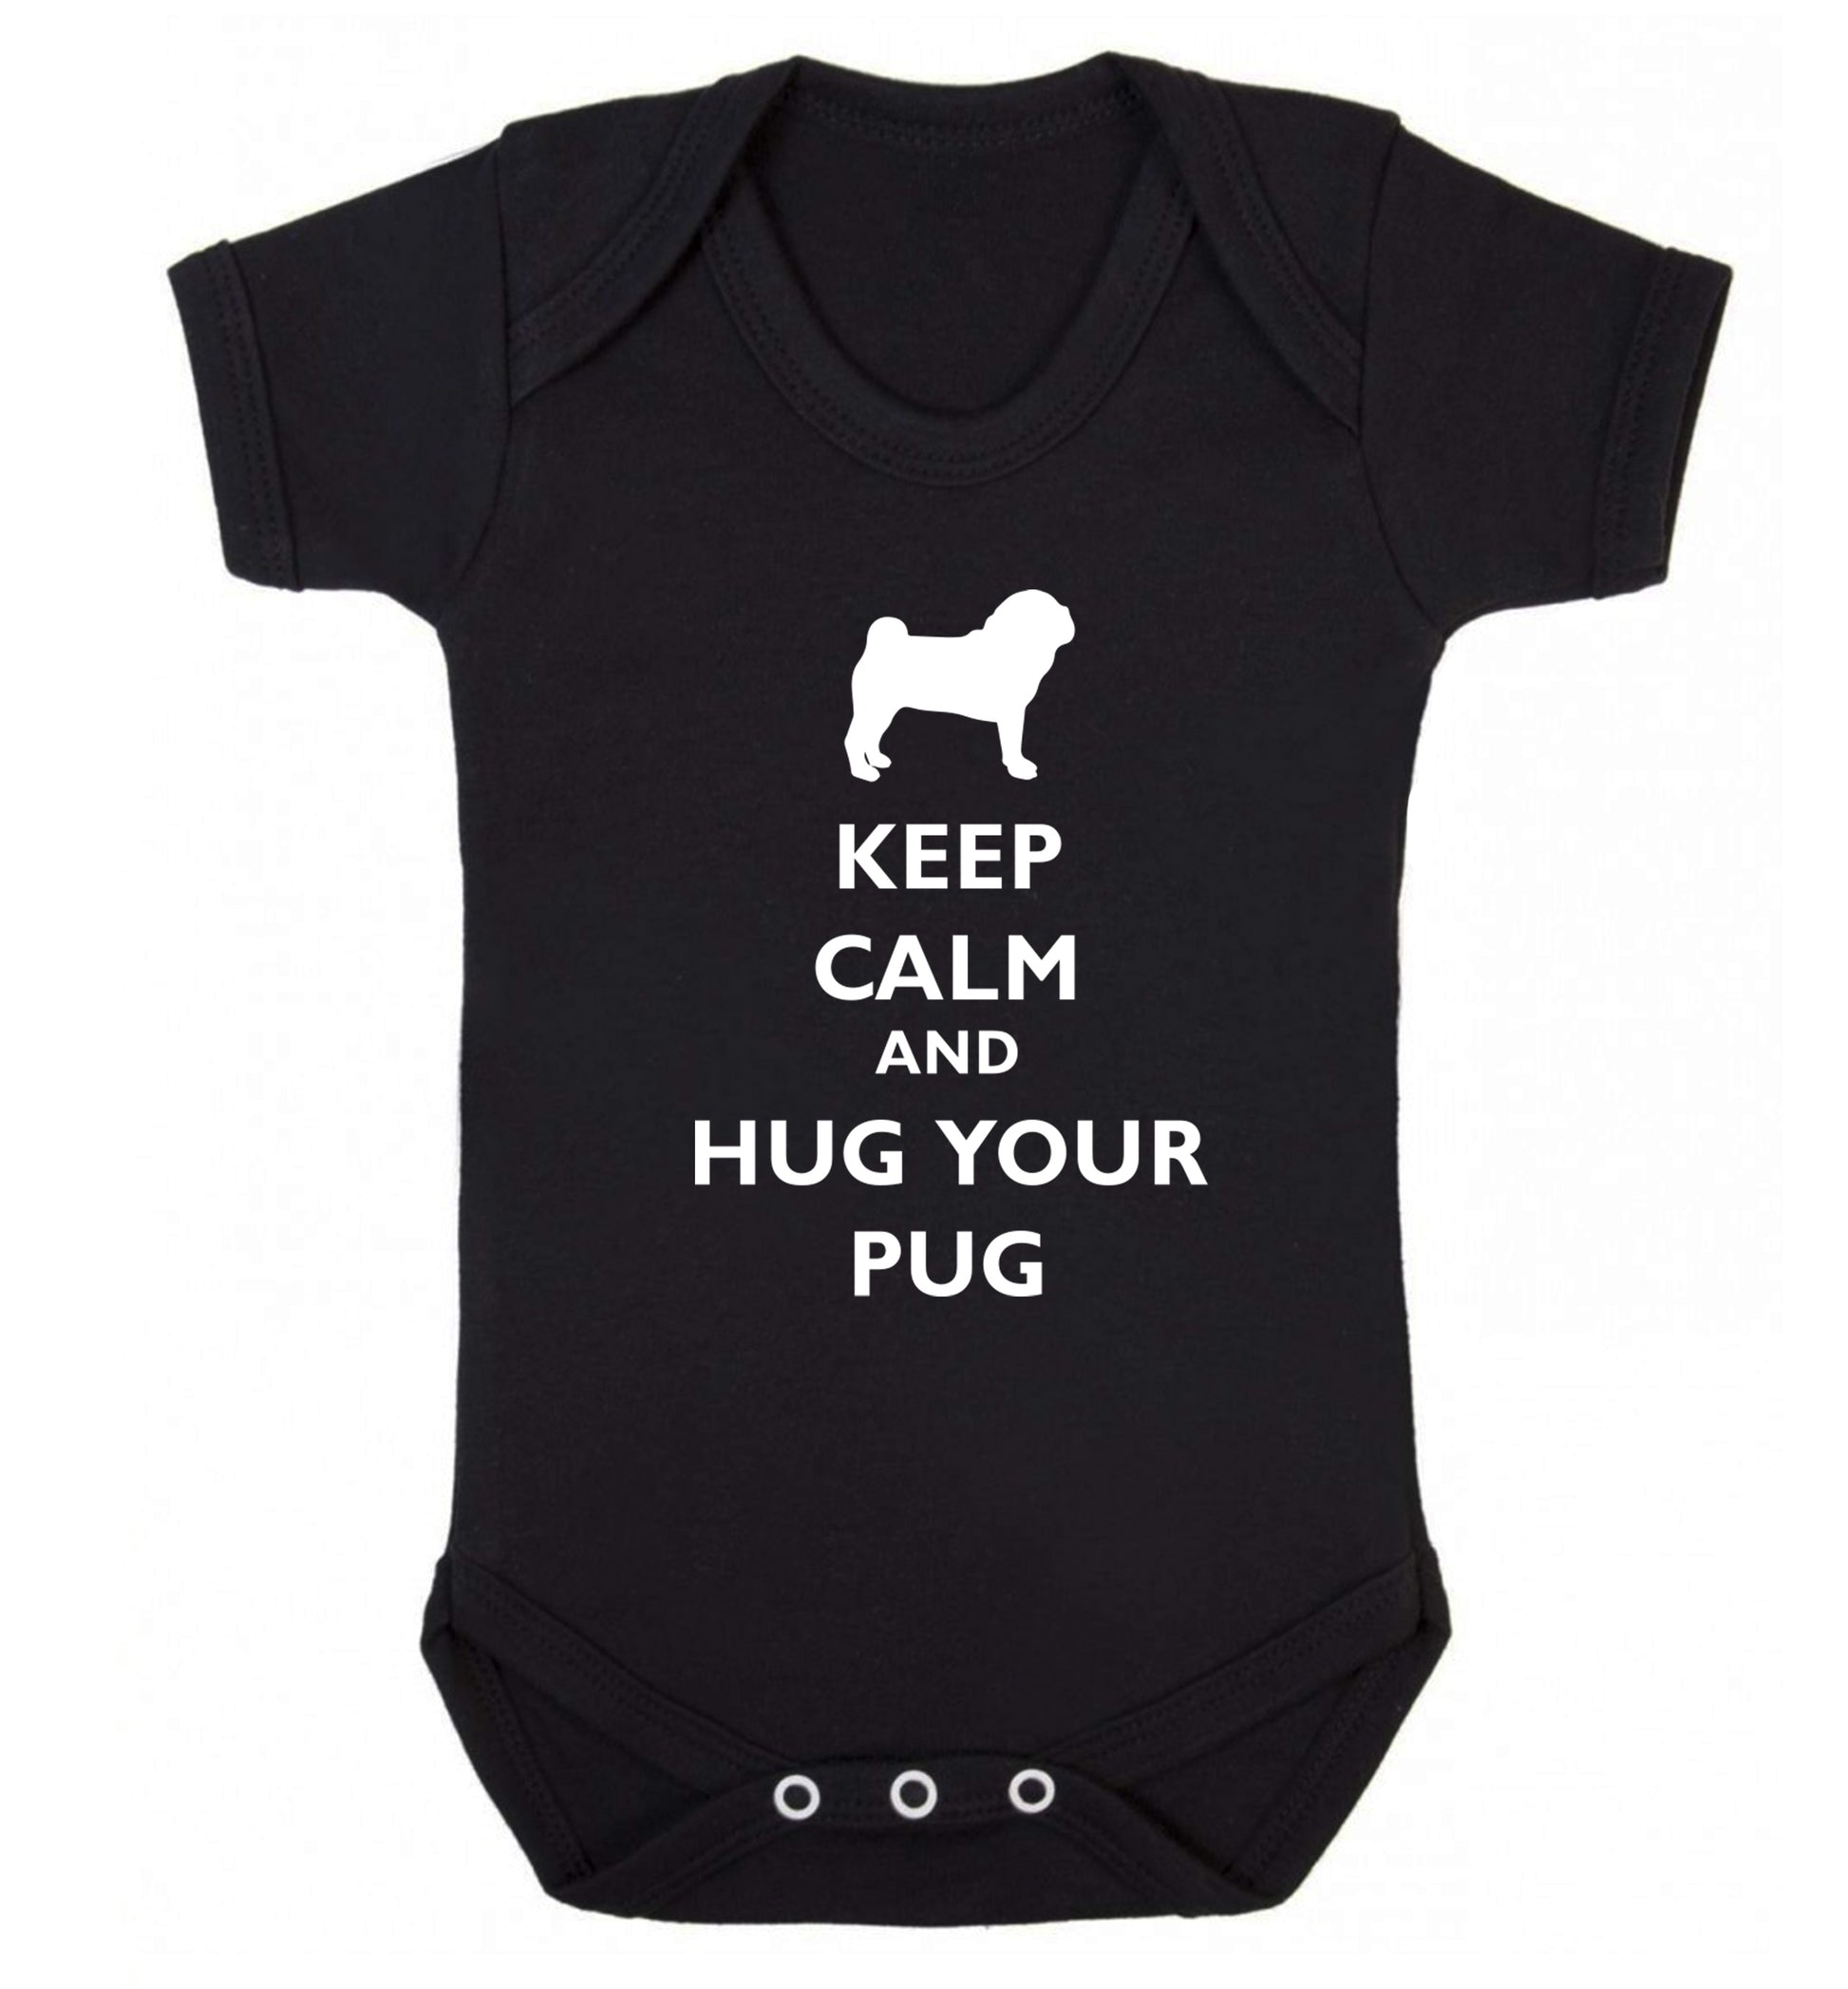 Keep calm and hug your pug Baby Vest black 18-24 months